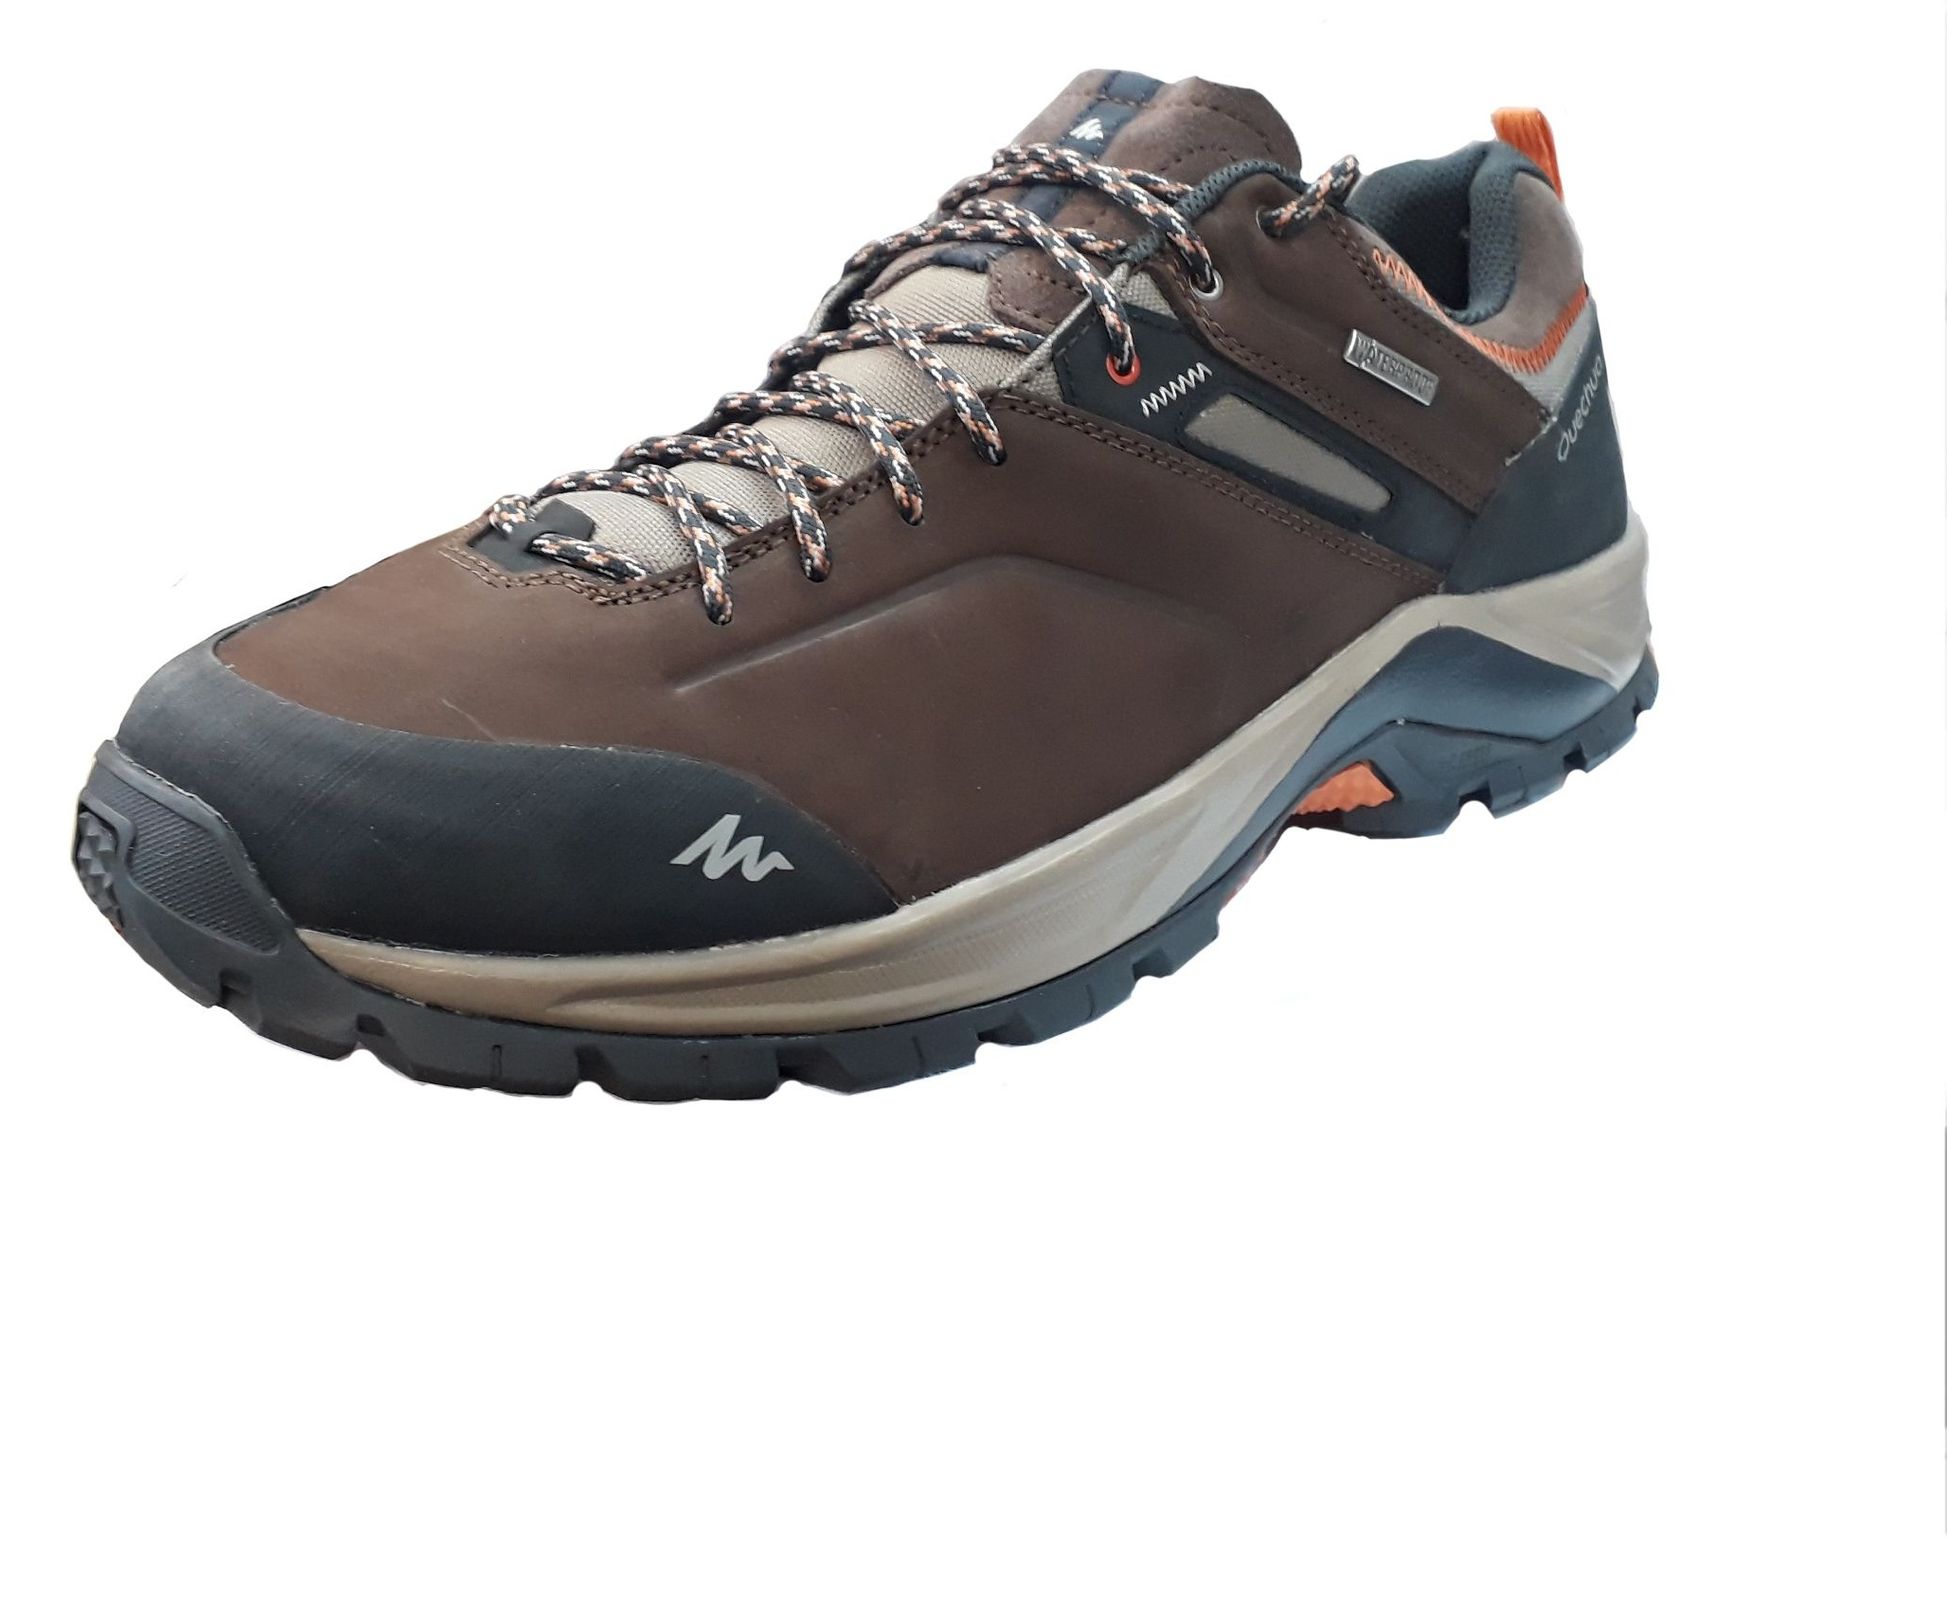 کفش مخصوص کوهنوردی مردانه کچوا مدل Q 1